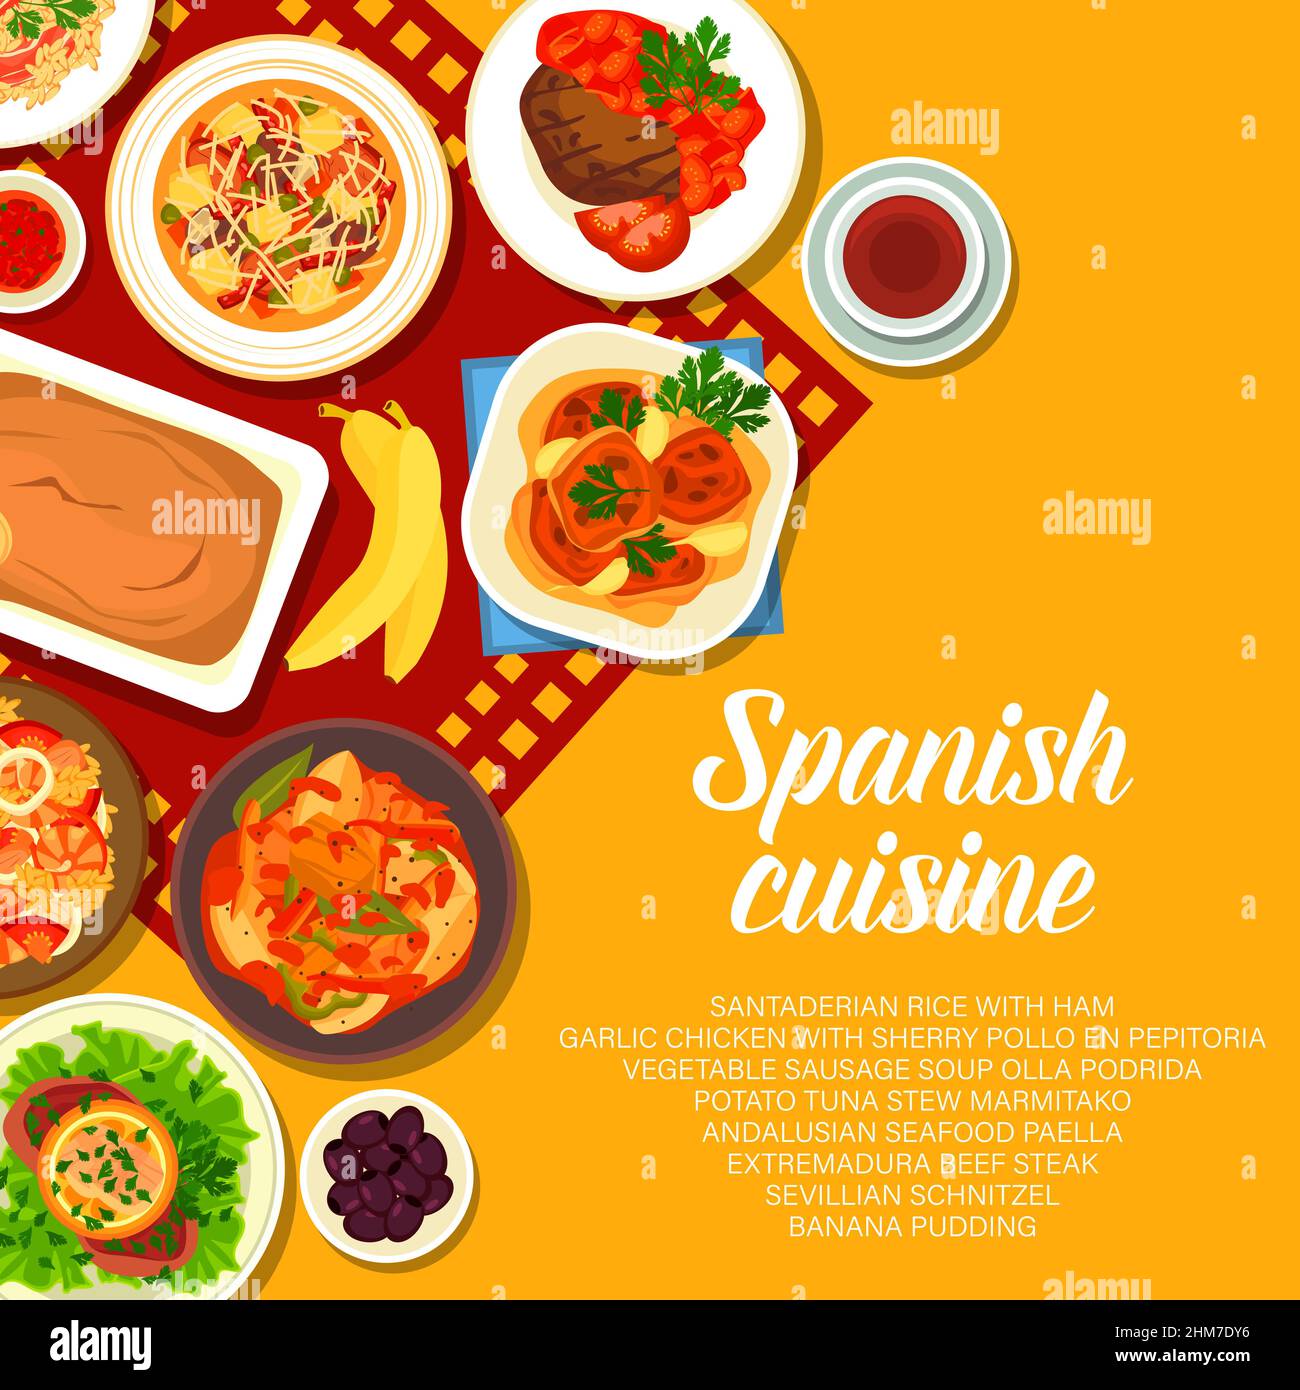 Spanish cuisine vector menu cover santaderian rice with ham, garlic chicken with sherry pollo en pepitoria. Vegetable sausage soup olla podrida, potat Stock Vector